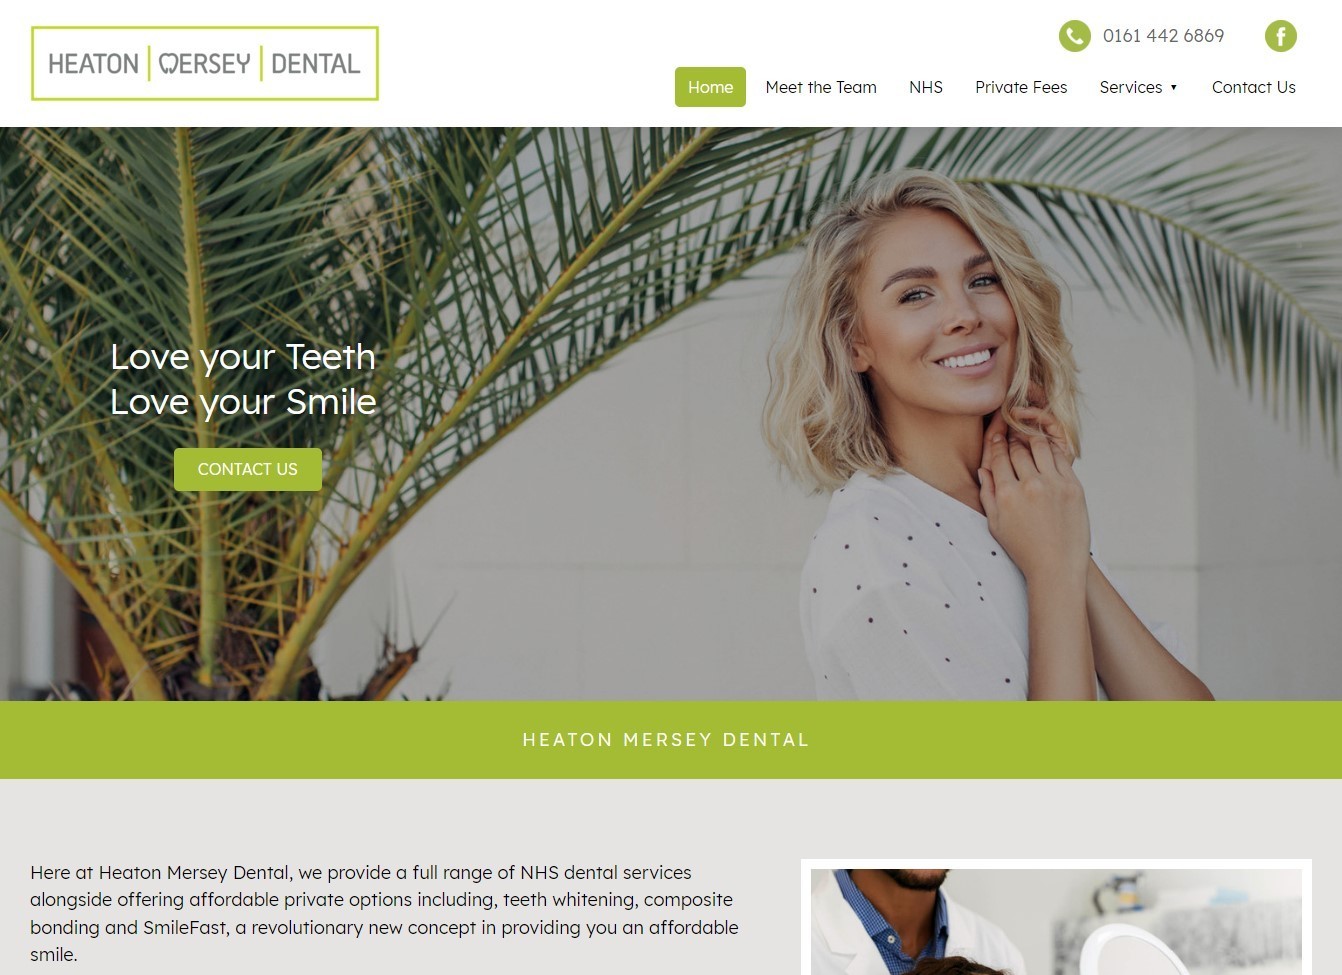 Heaton Mersey Dental website page